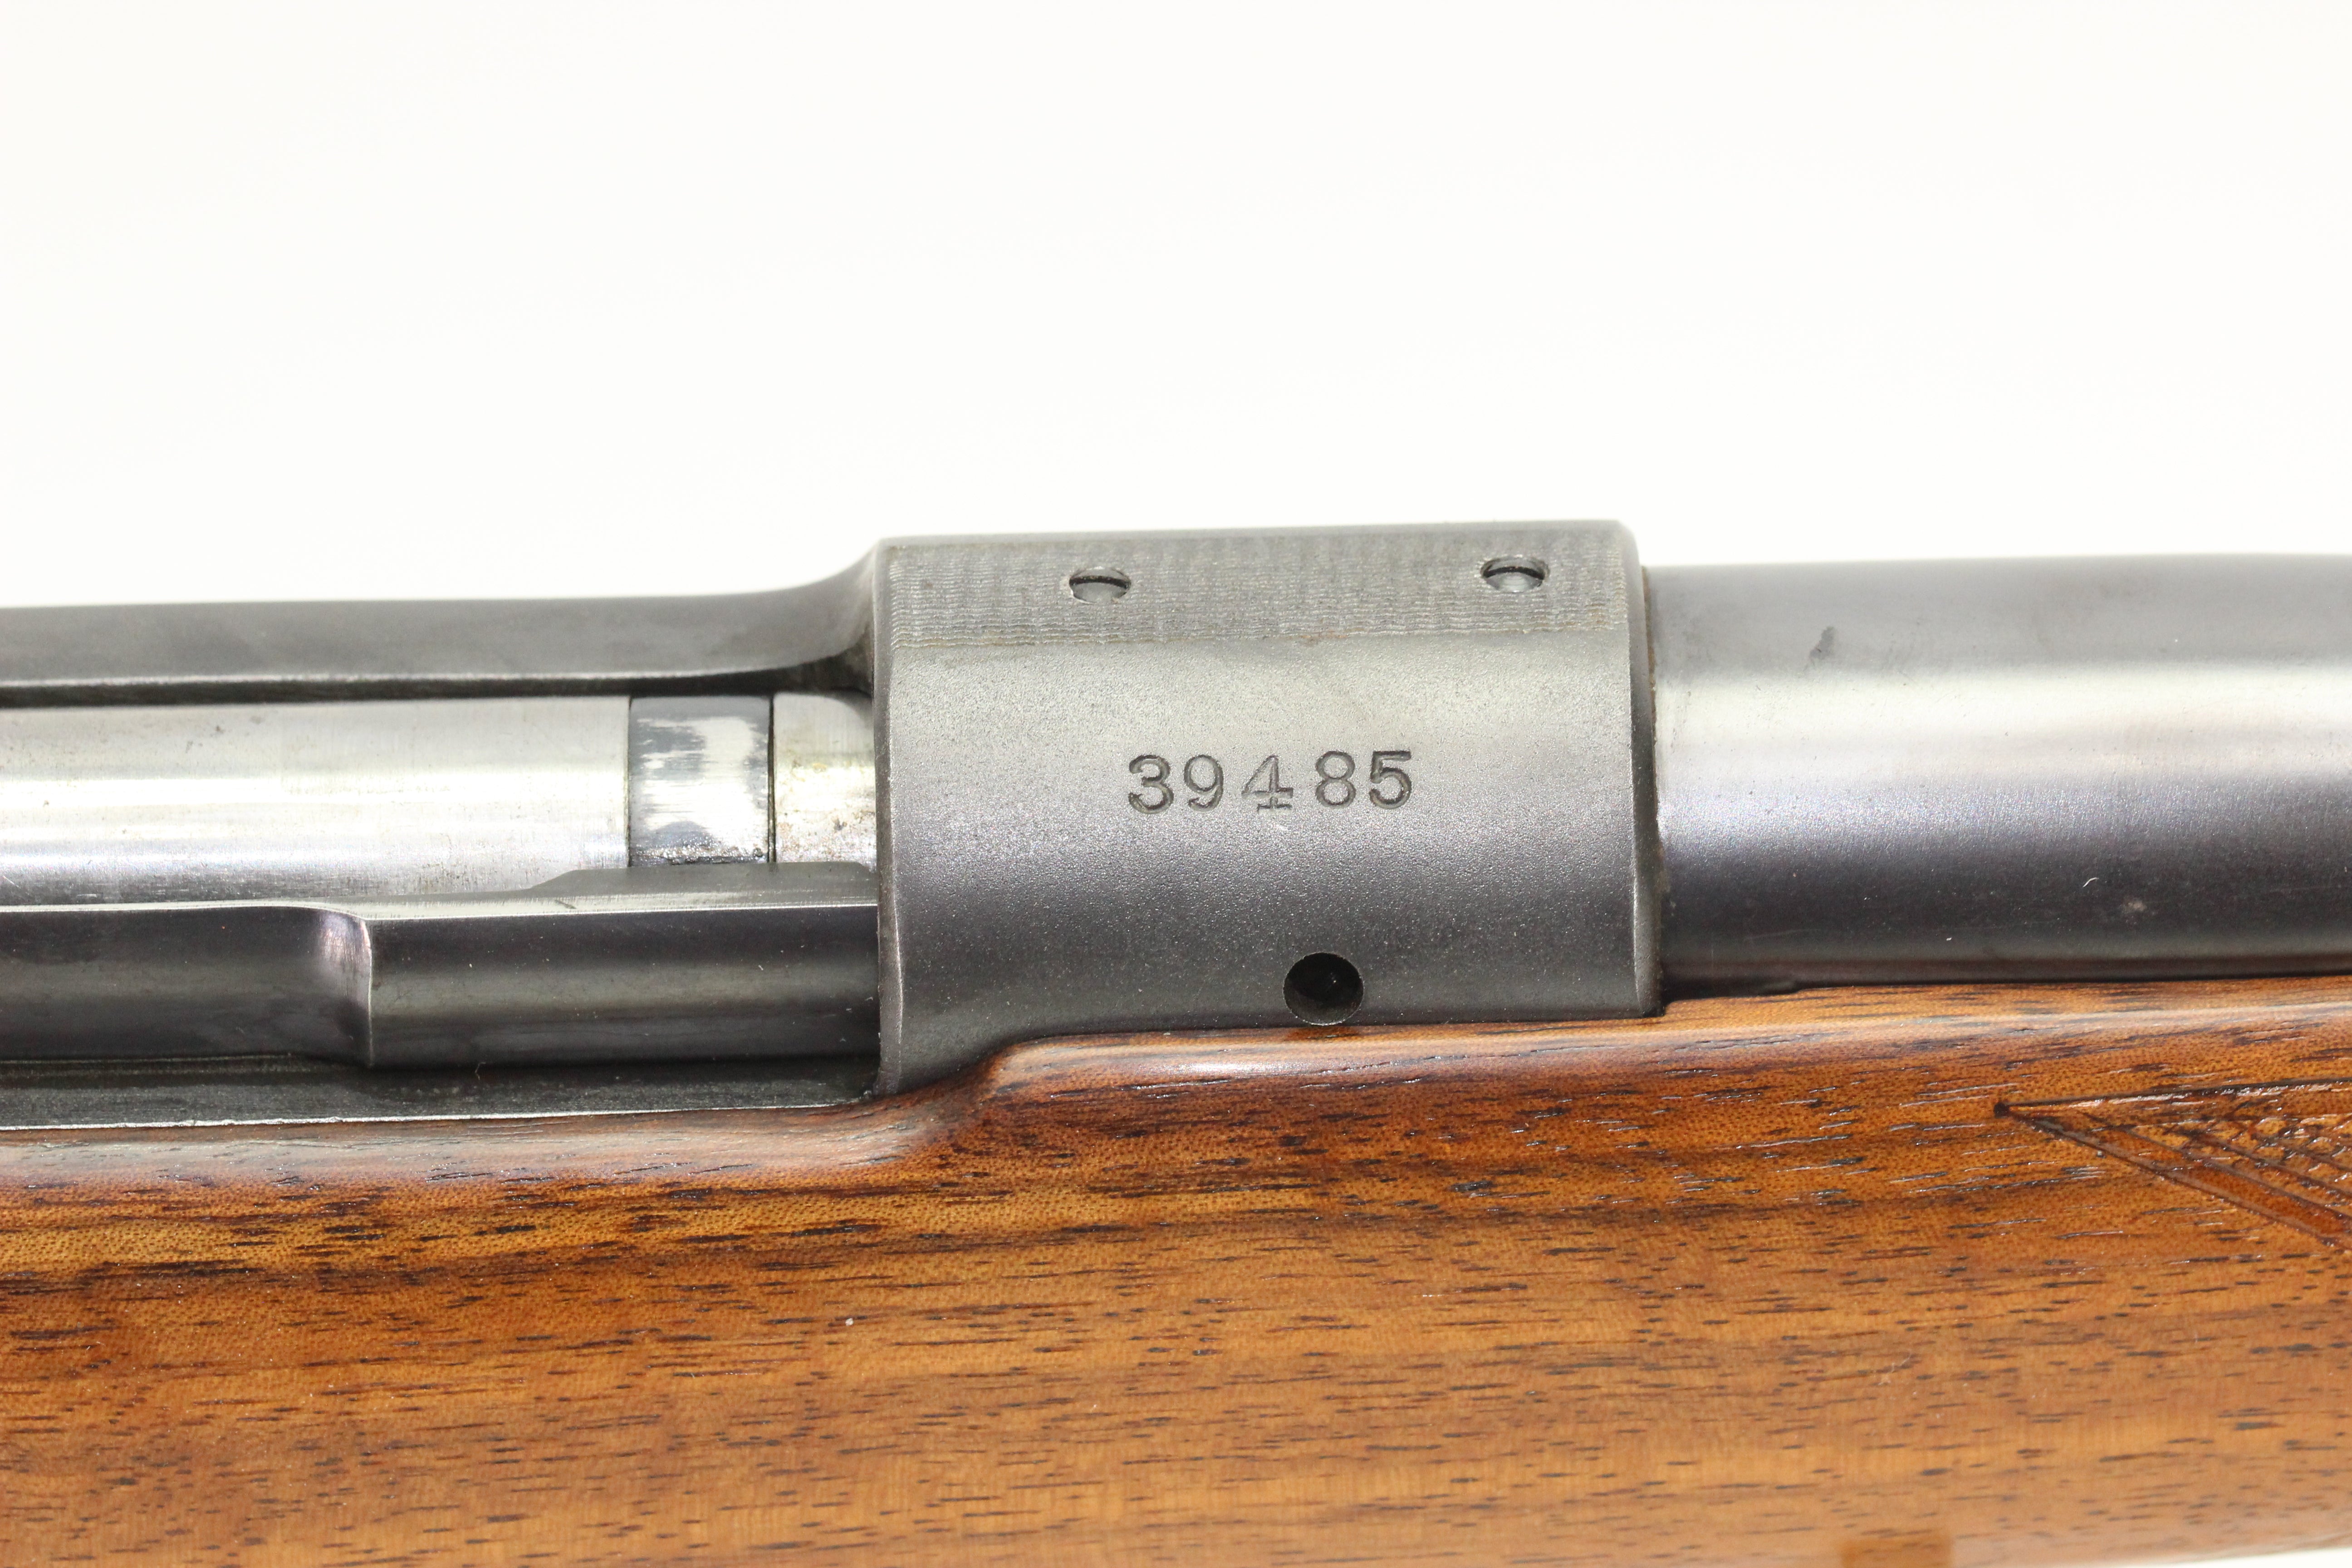 .22 Hornet Standard Rifle - 1941